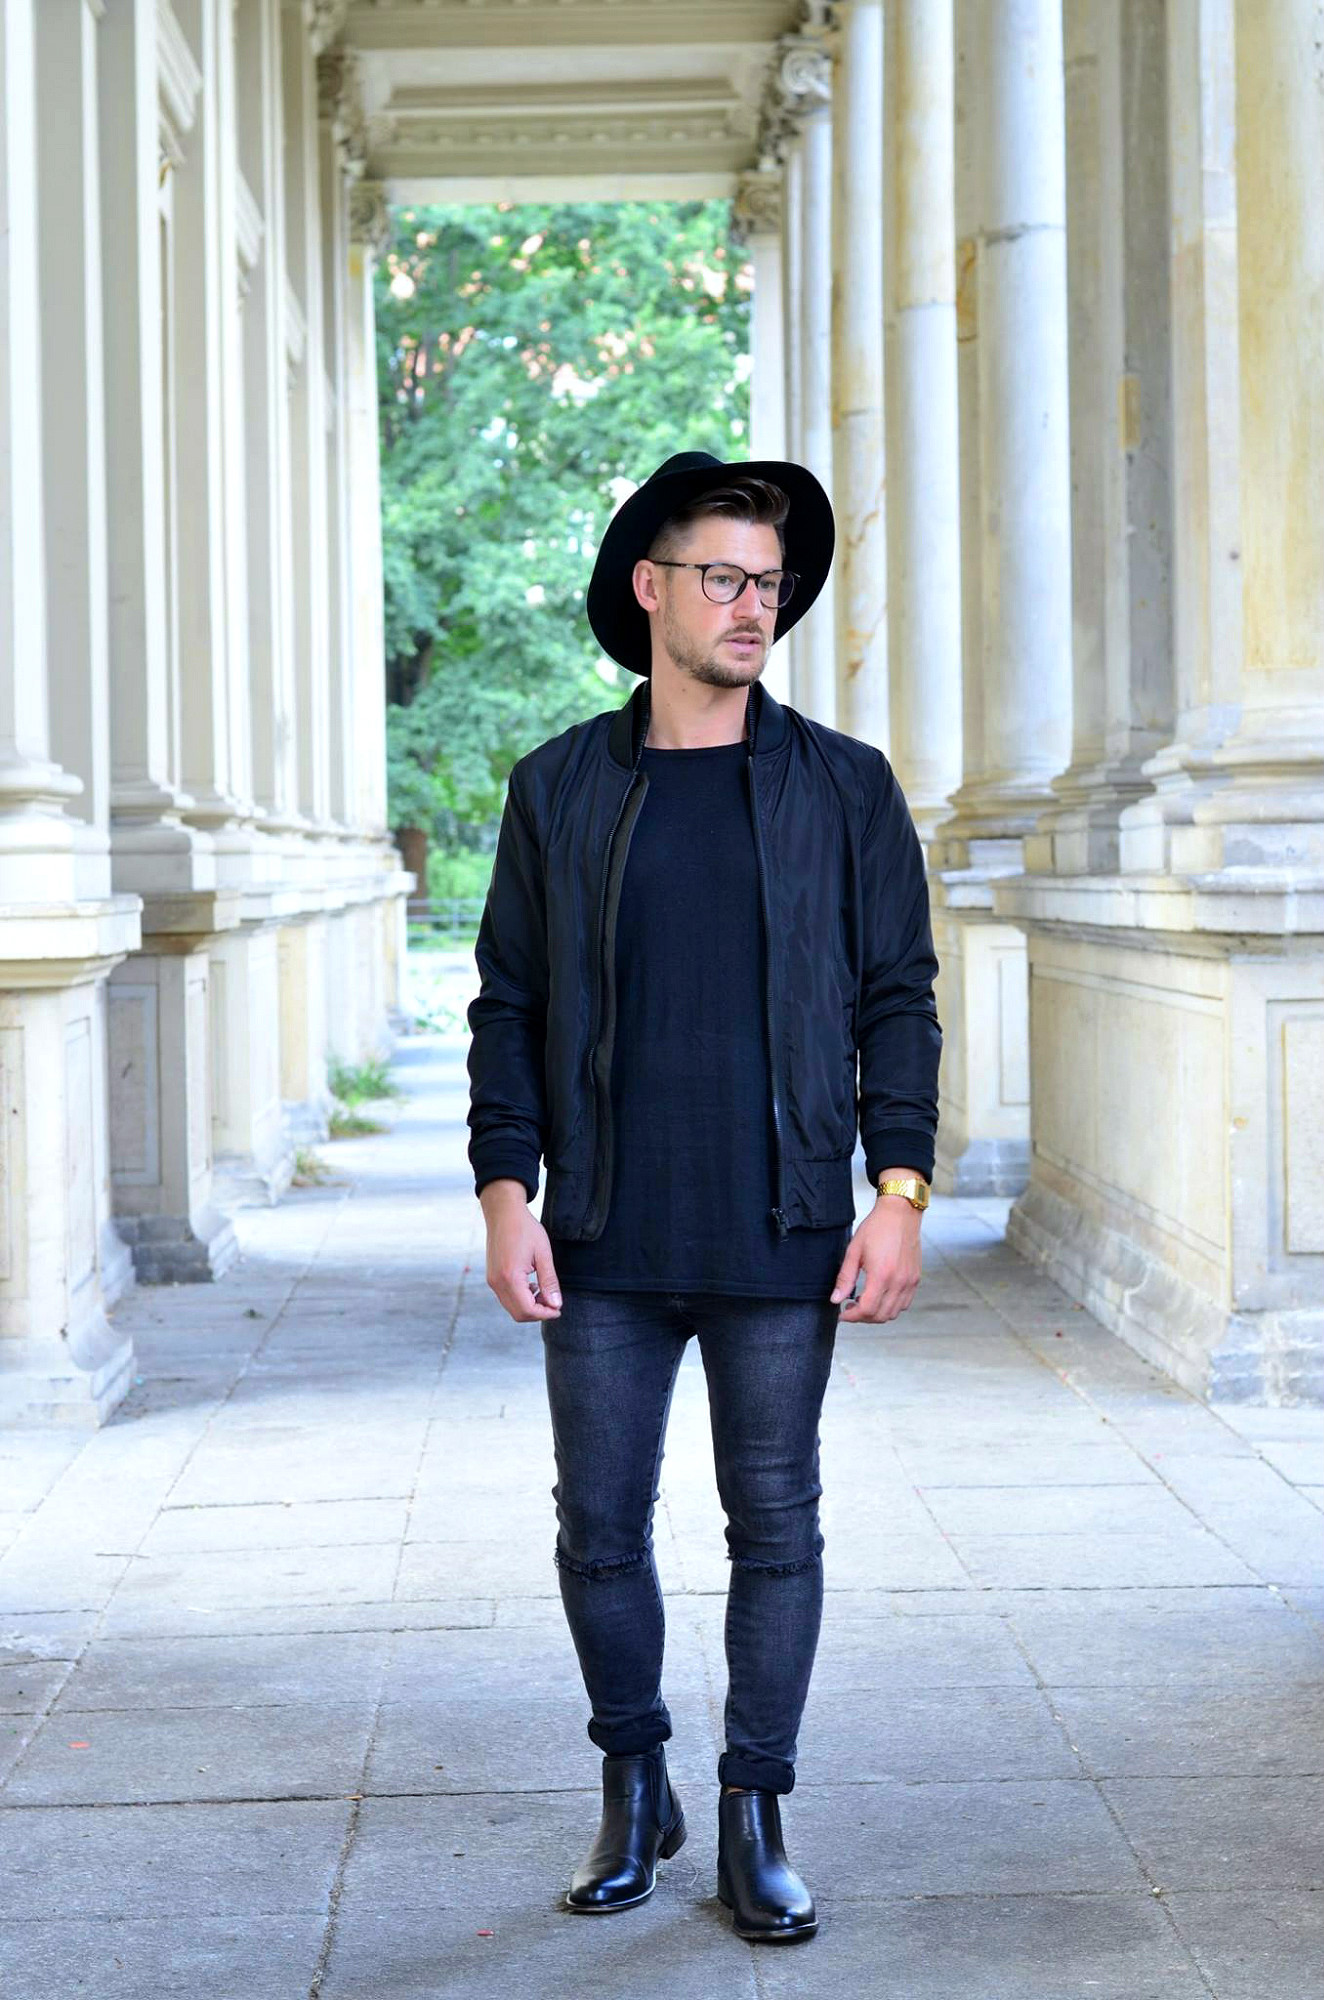 Männer-Mode-Blog-Berlin-Outfit-Chelsea-Boots-Fedora-Hat-Black